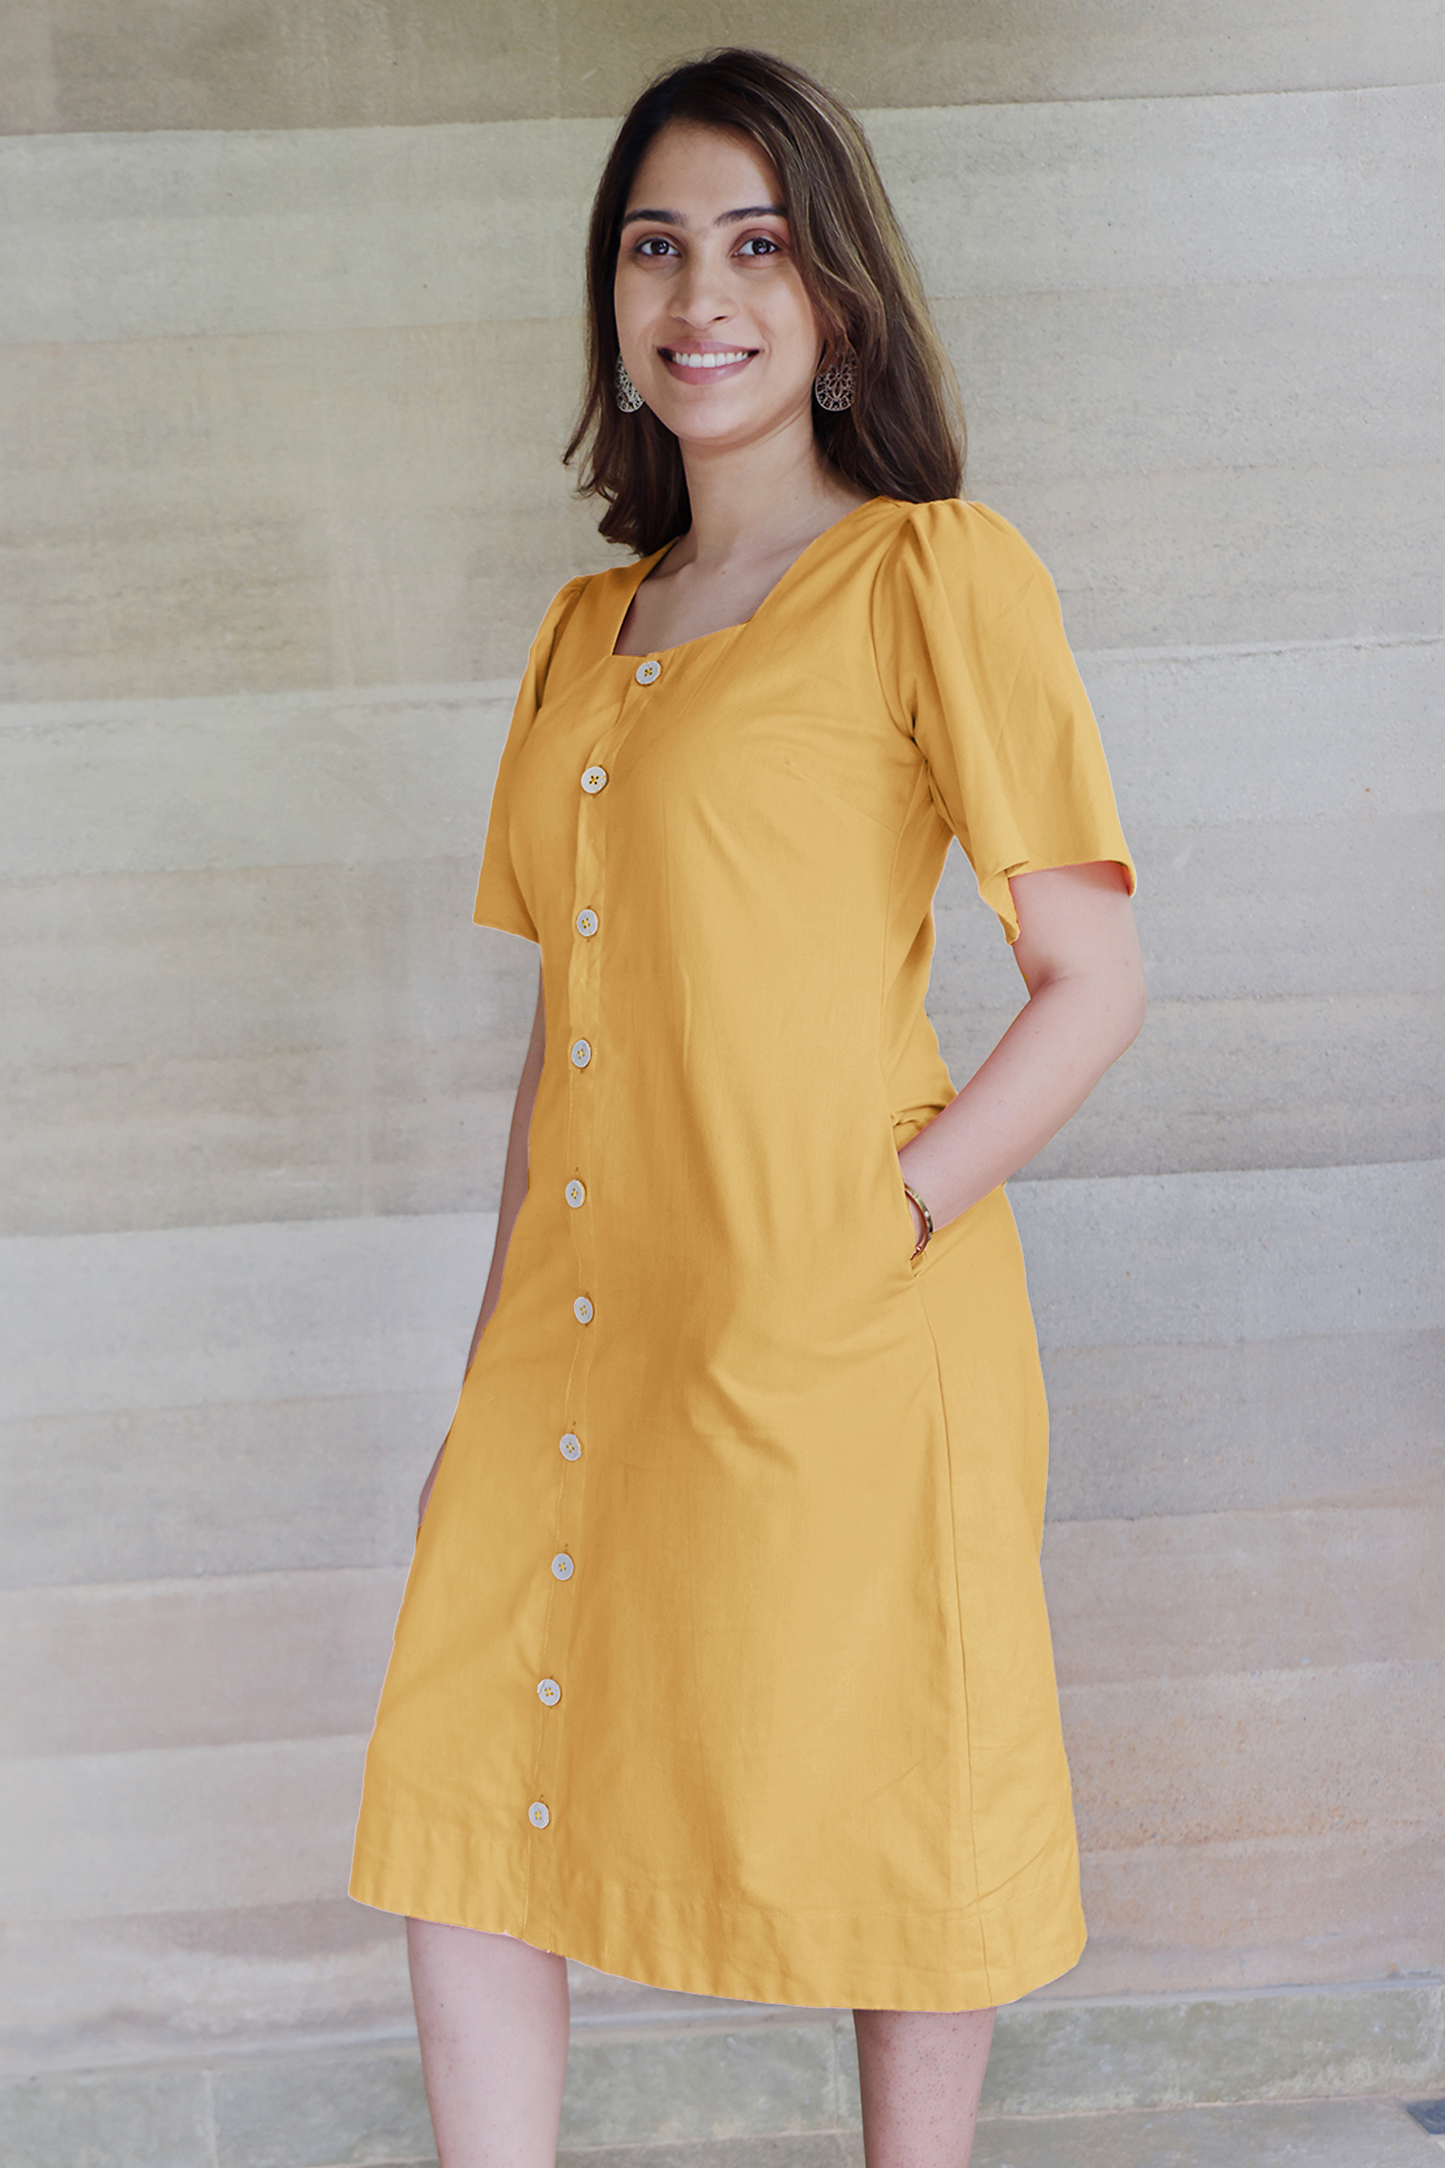 Square Neck A Line Dress in Monotone Solid Ochre Yellow